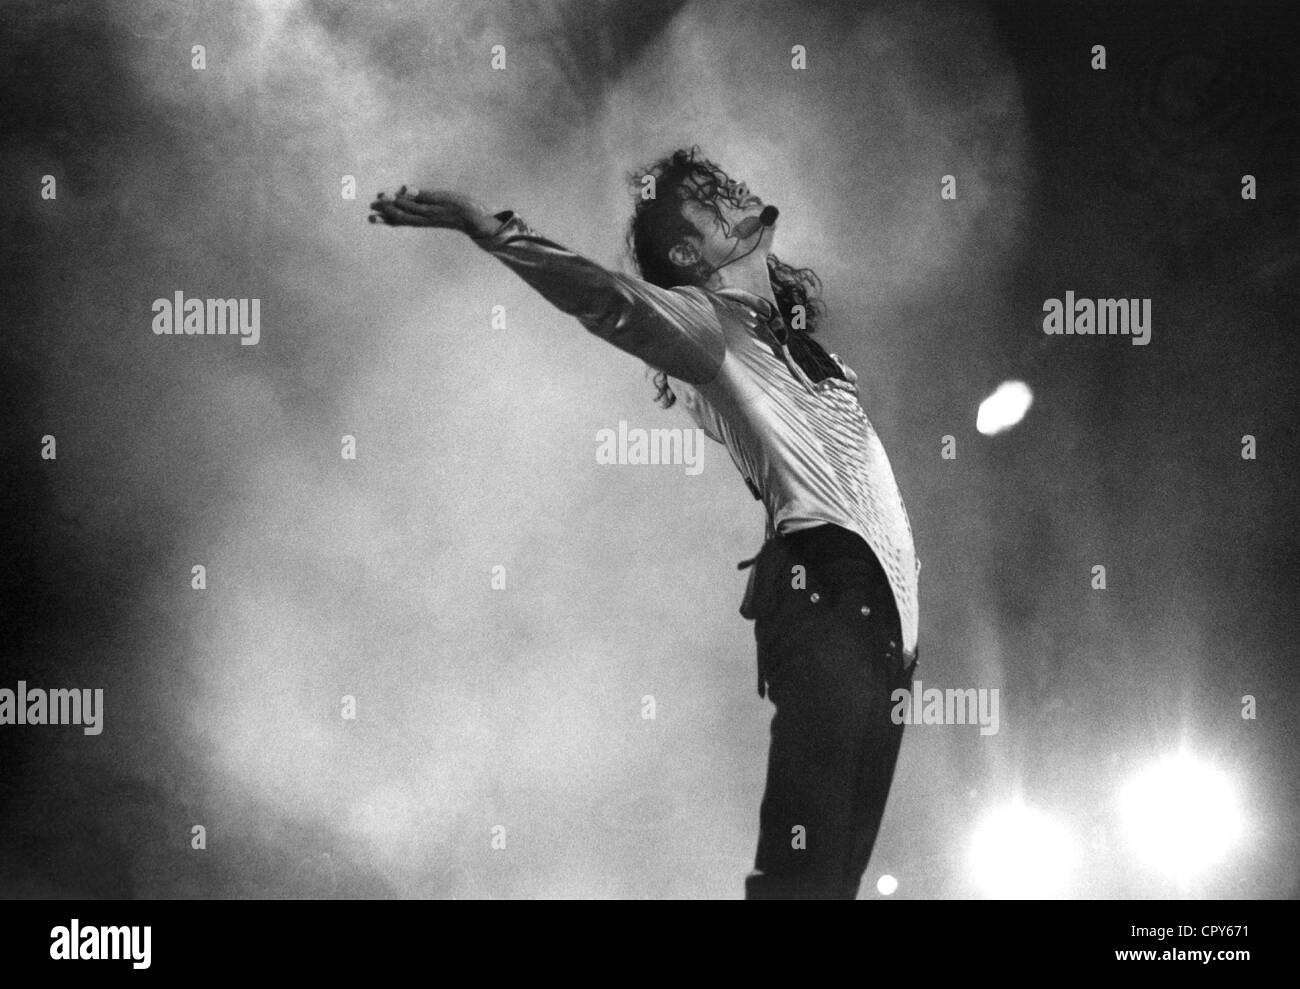 Jackson, Michael, 29.8.1958 - 25.6.2009, american singer (pop), half length, tournee: Dangerous, Olympia stadion, Munich, 1992, , Stock Photo